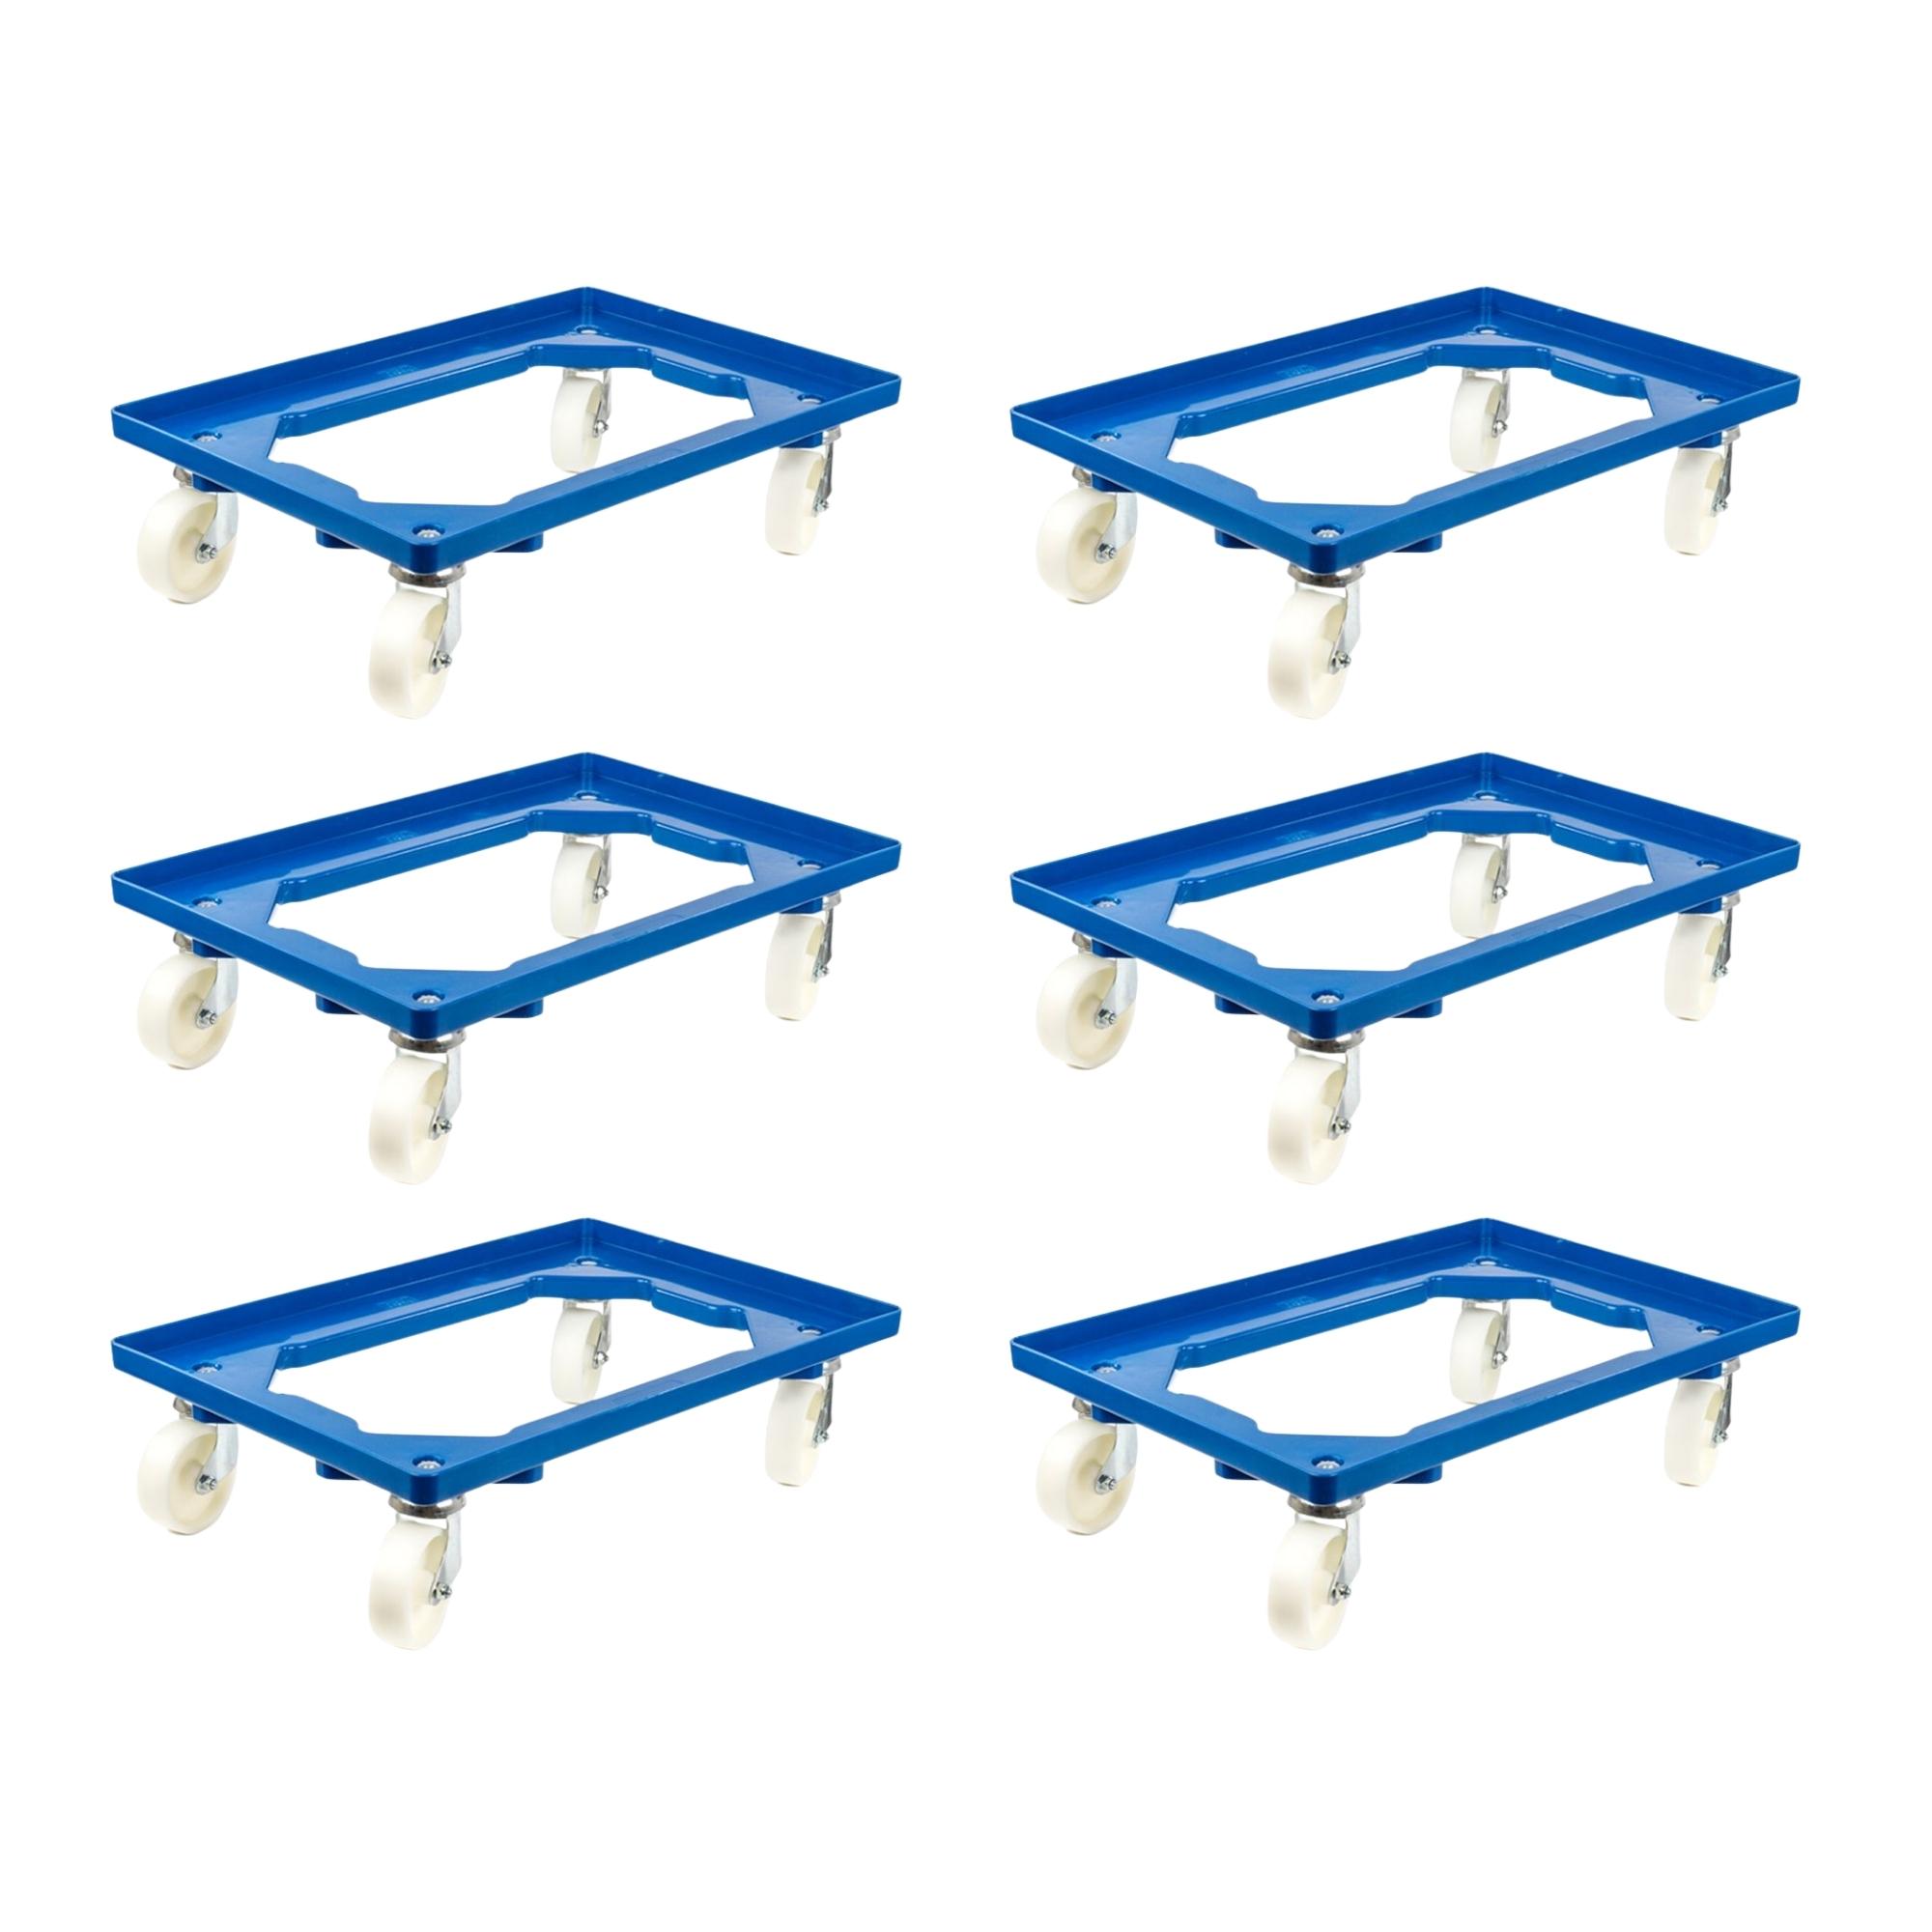 SparSet 6x Transportroller für Euroboxen 60x40cm mit Kunststoffräder blau | Offenes Deck | 2 Lenkrollen & 2 Bremsrollen | Traglast 300kg | Kistenroller Logistikroller Rollwagen Profi-Fahrgestell